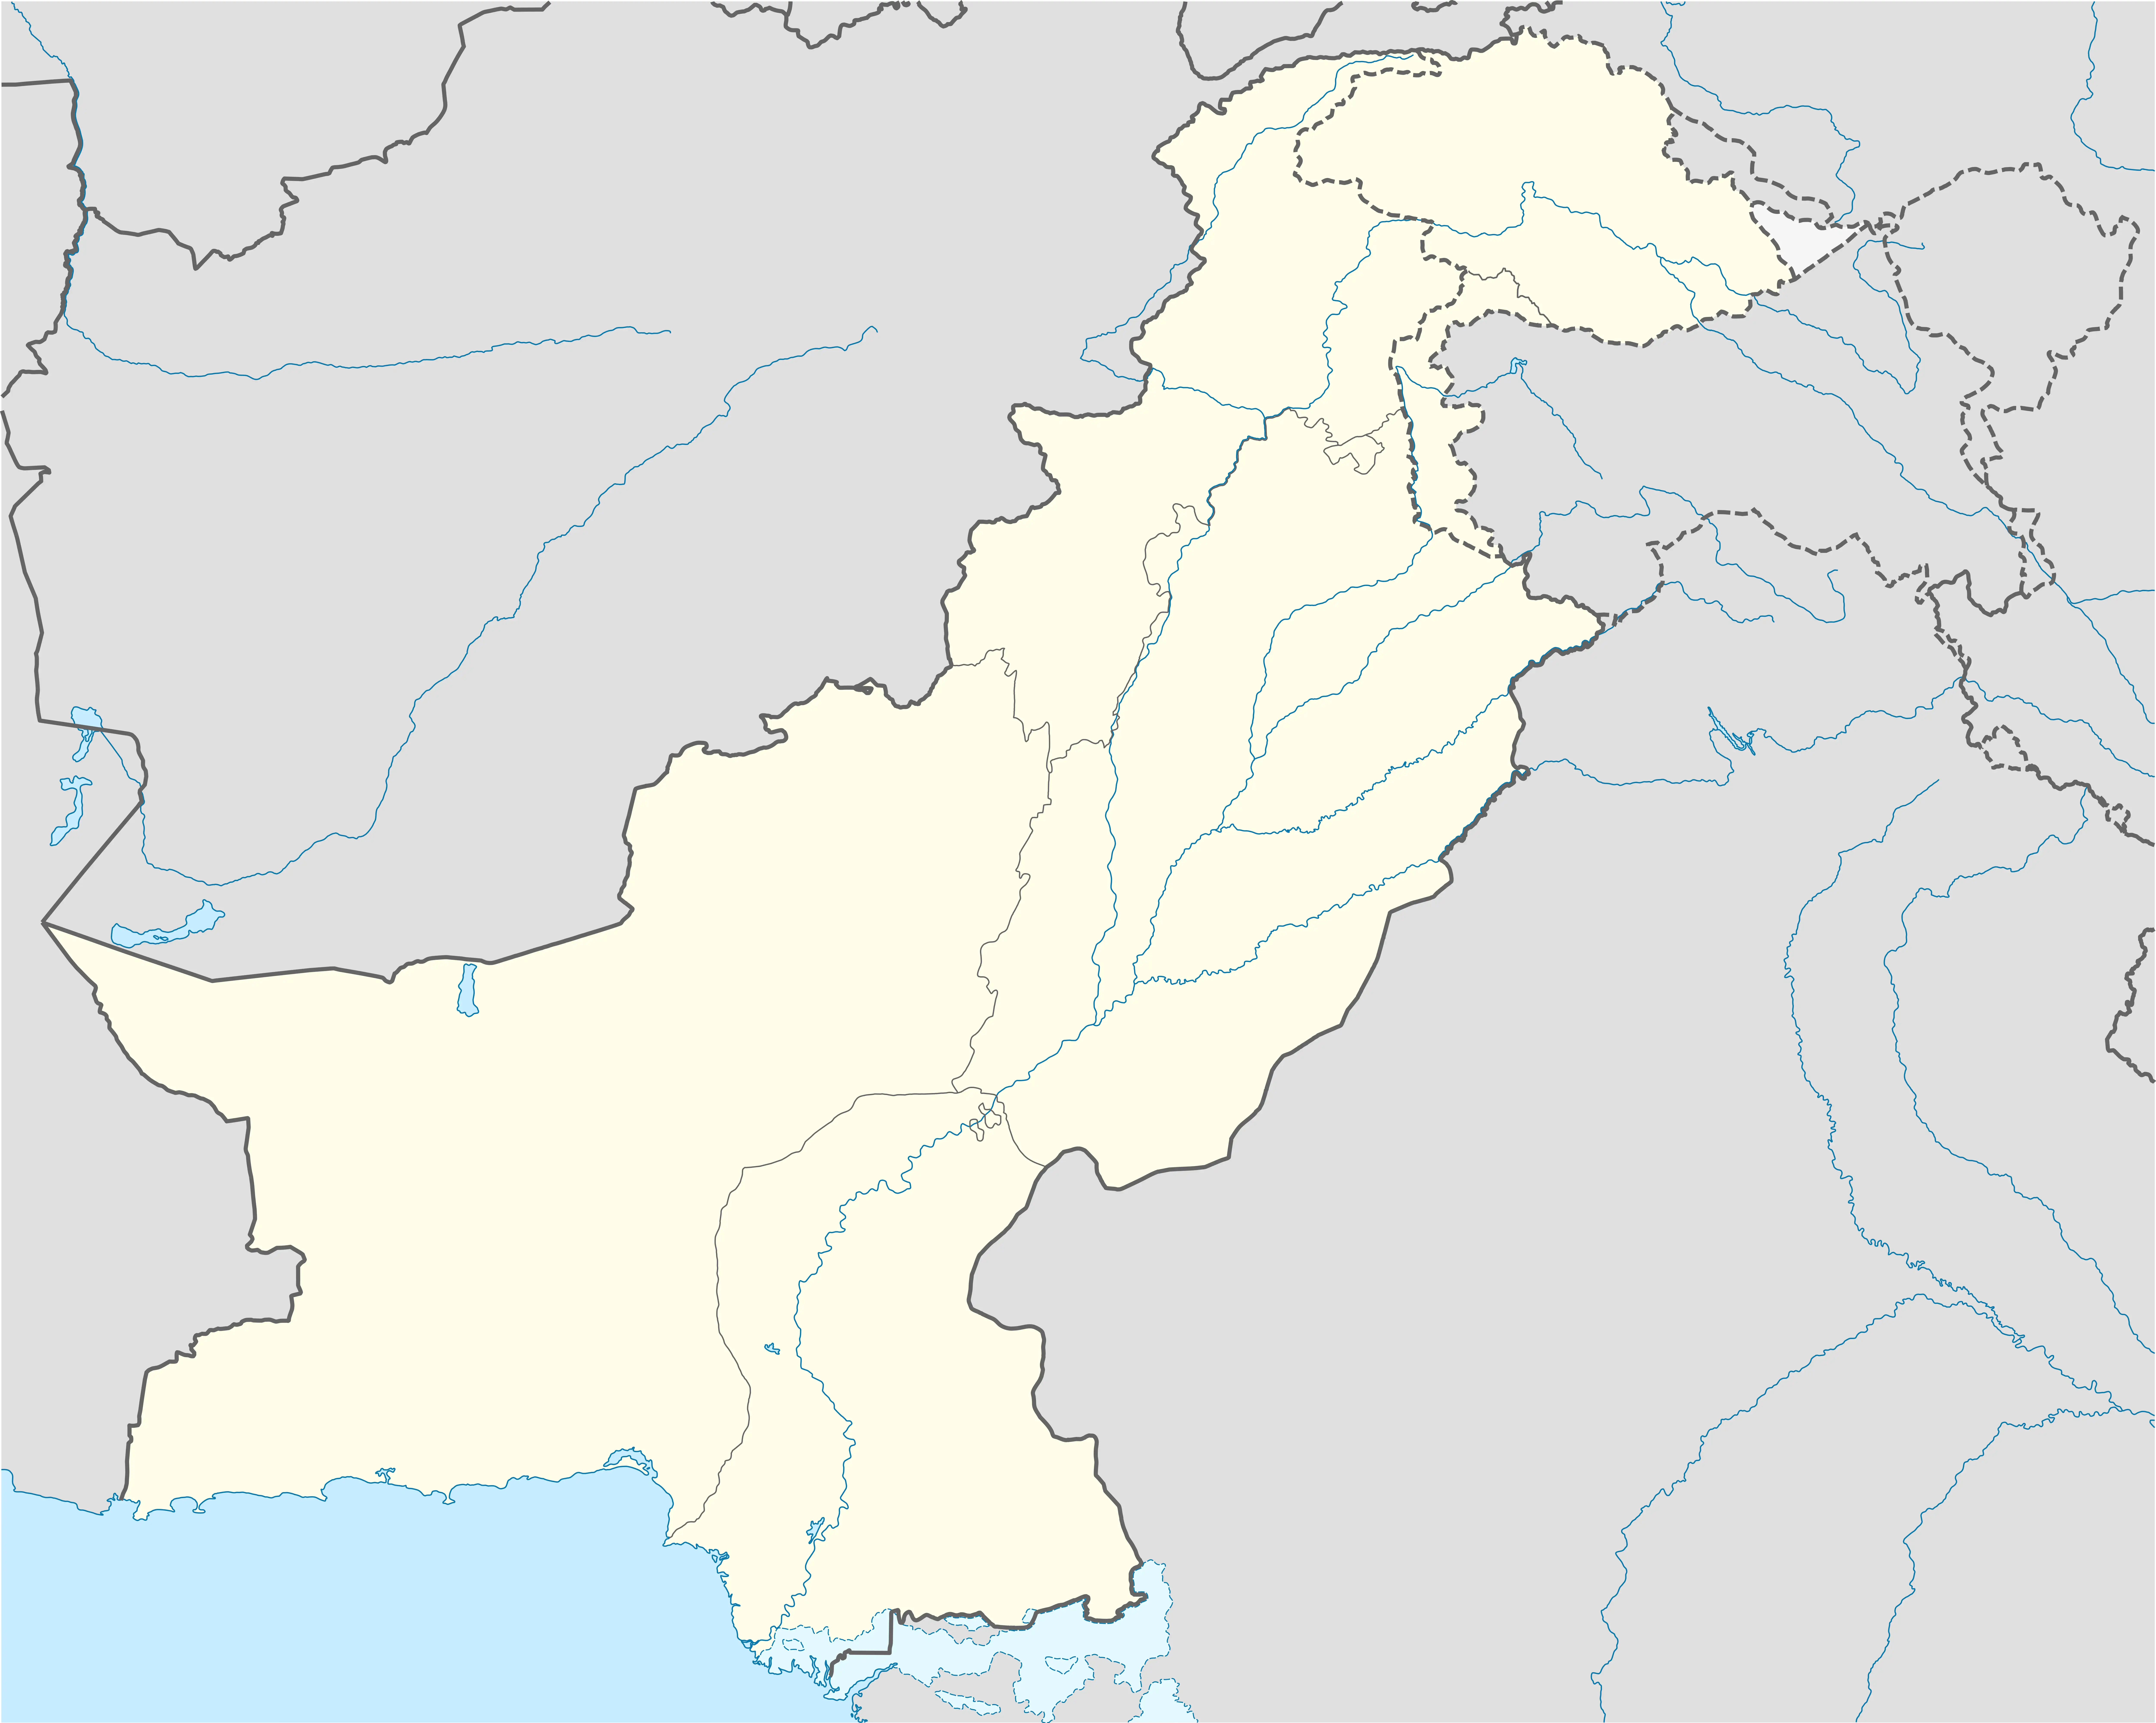 Mirpur Khas is located in Pakistan